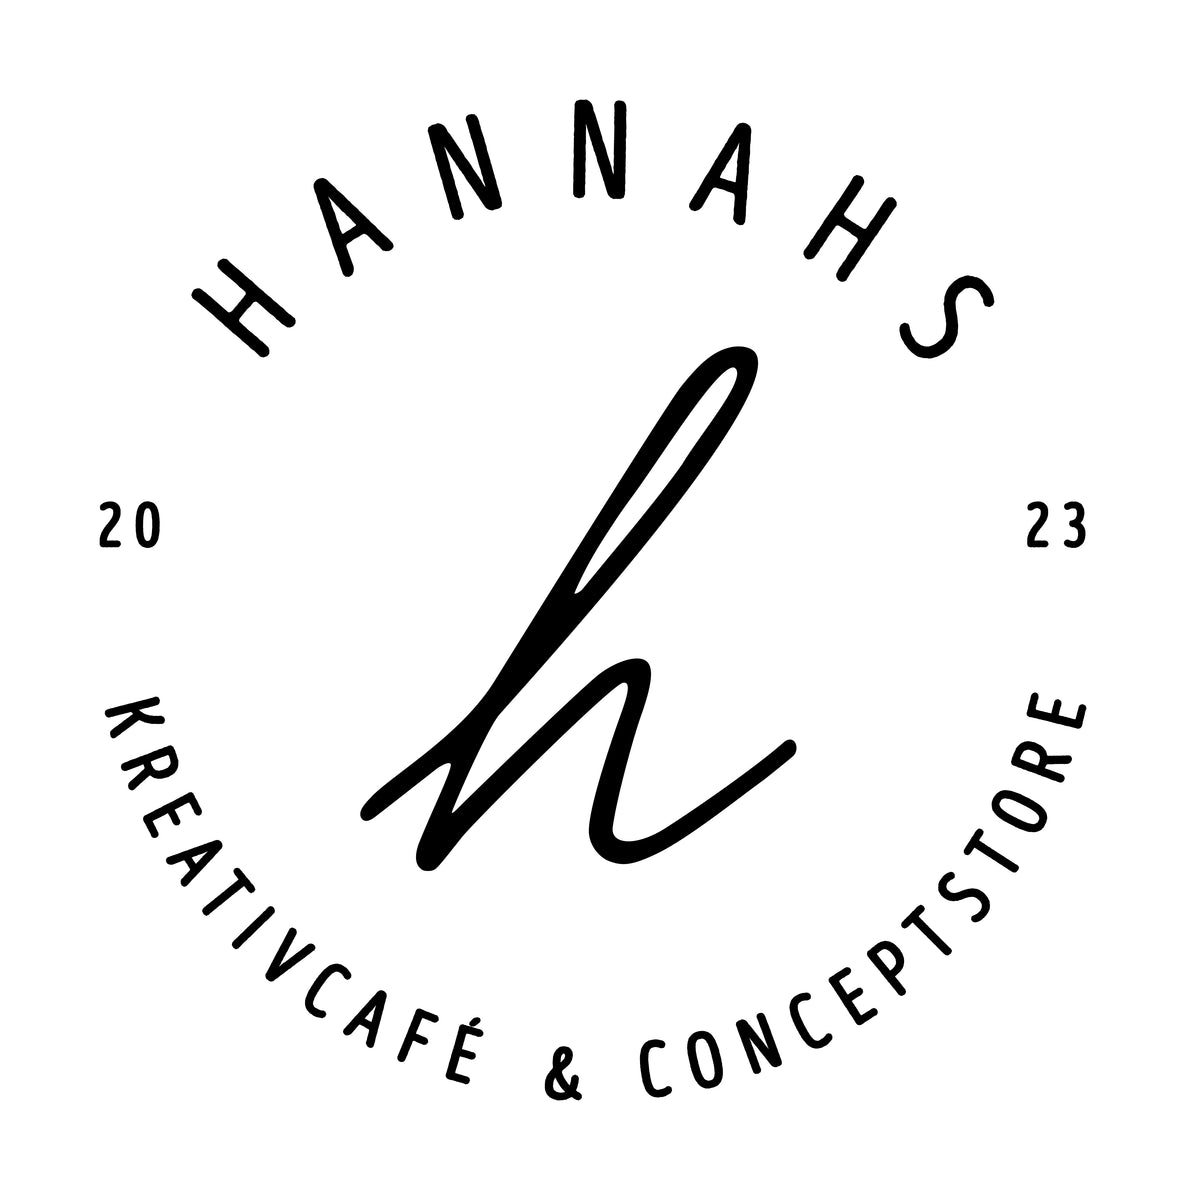 (c) Hannahs-kreativcafe.de